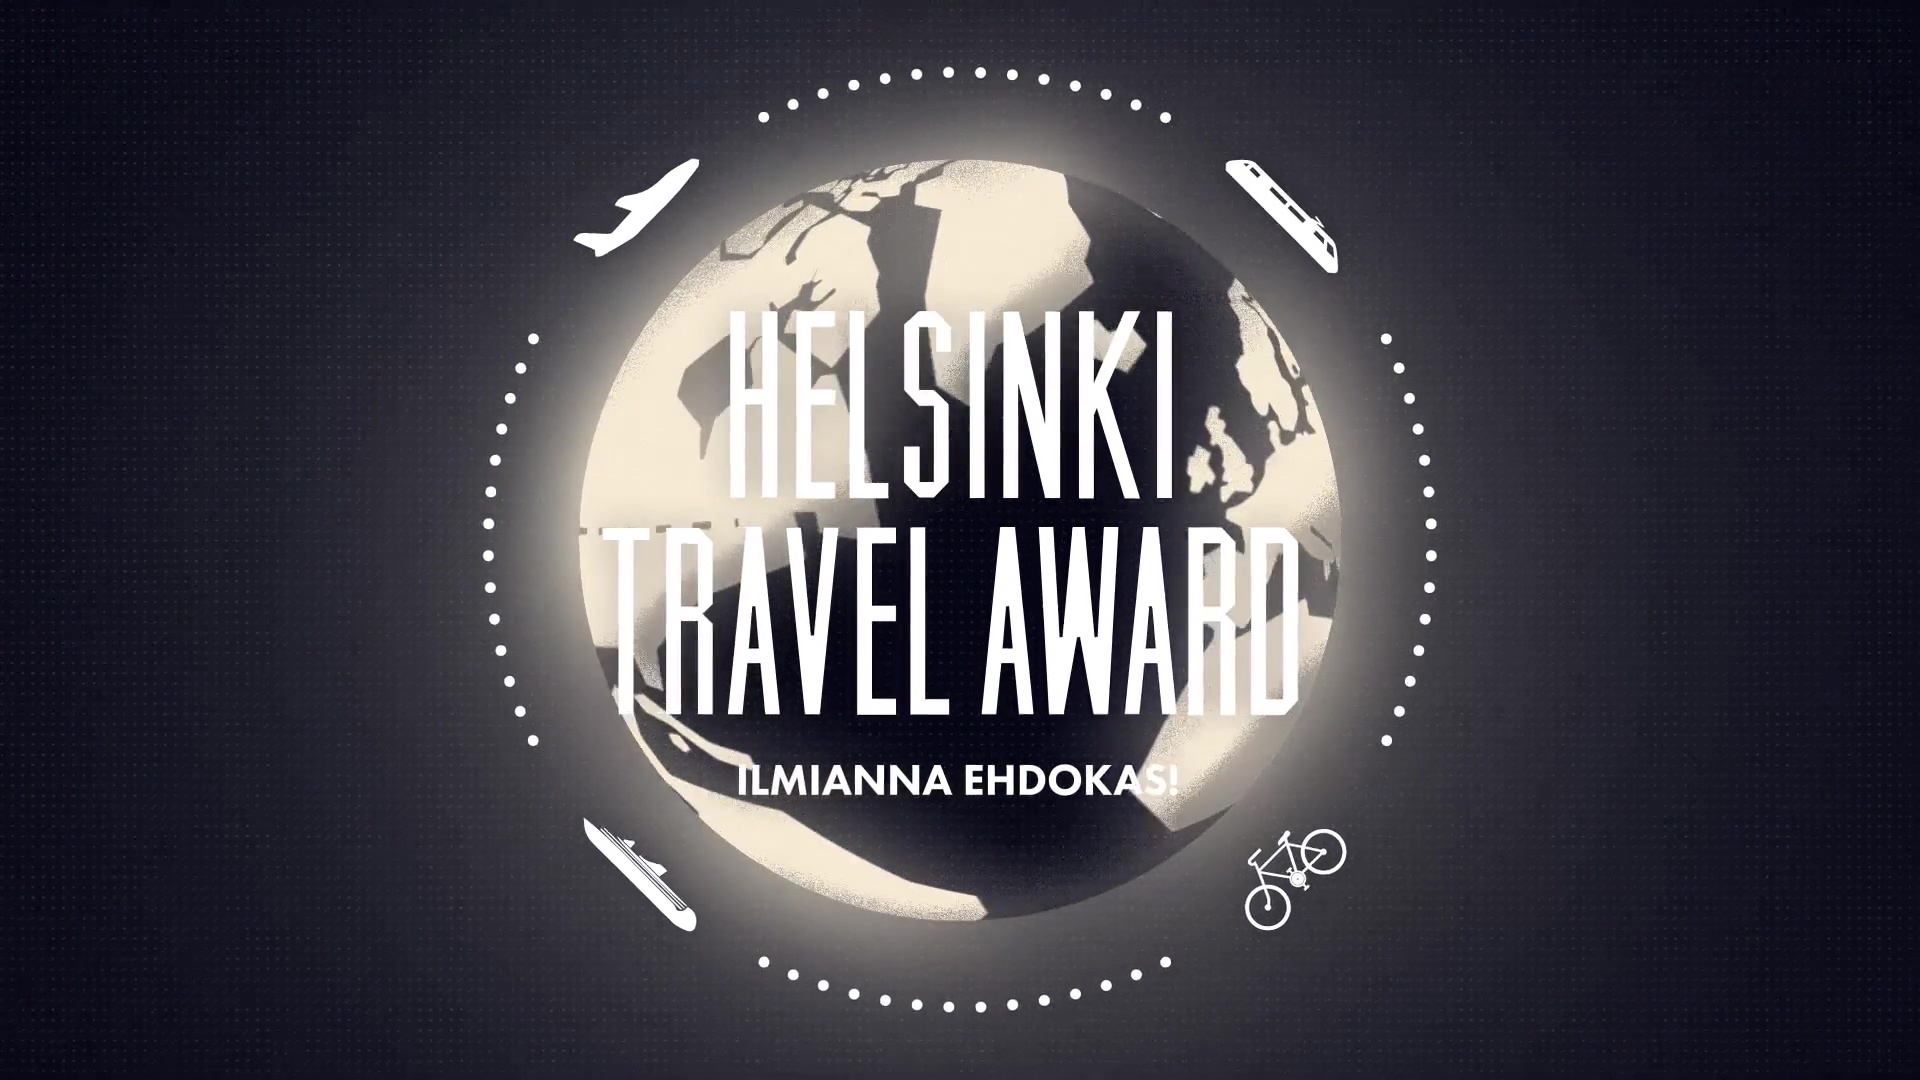 Helsinki Travel Award